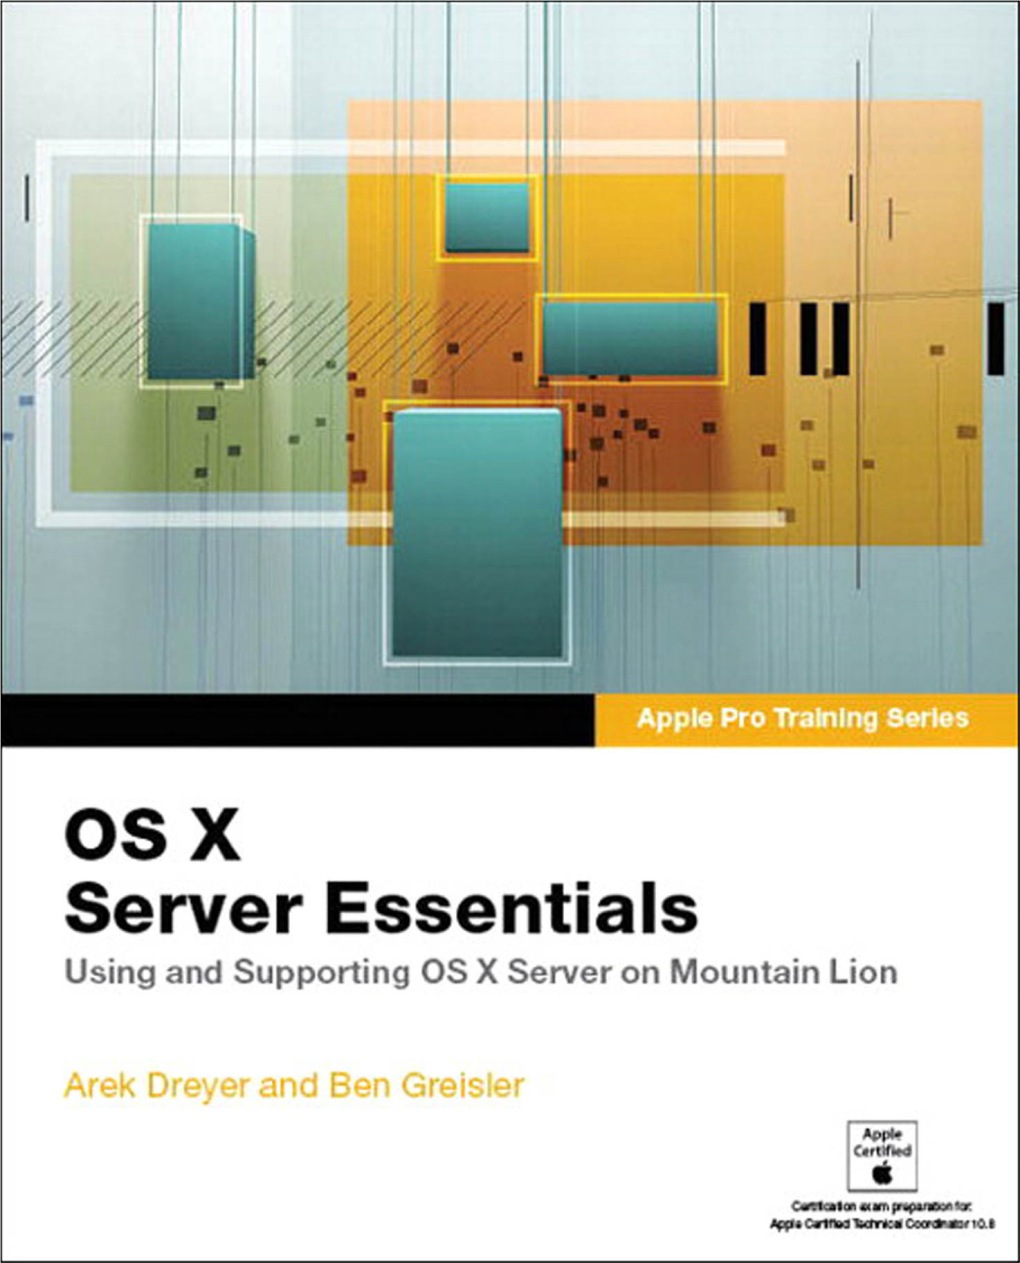 OS X Server Essentials Arek Dreyer and Ben Greisler Apple Pro Training Series: OS X Server Essentials Arek Dreyer and Ben Greisler Copyright © 2013 by Peachpit Press